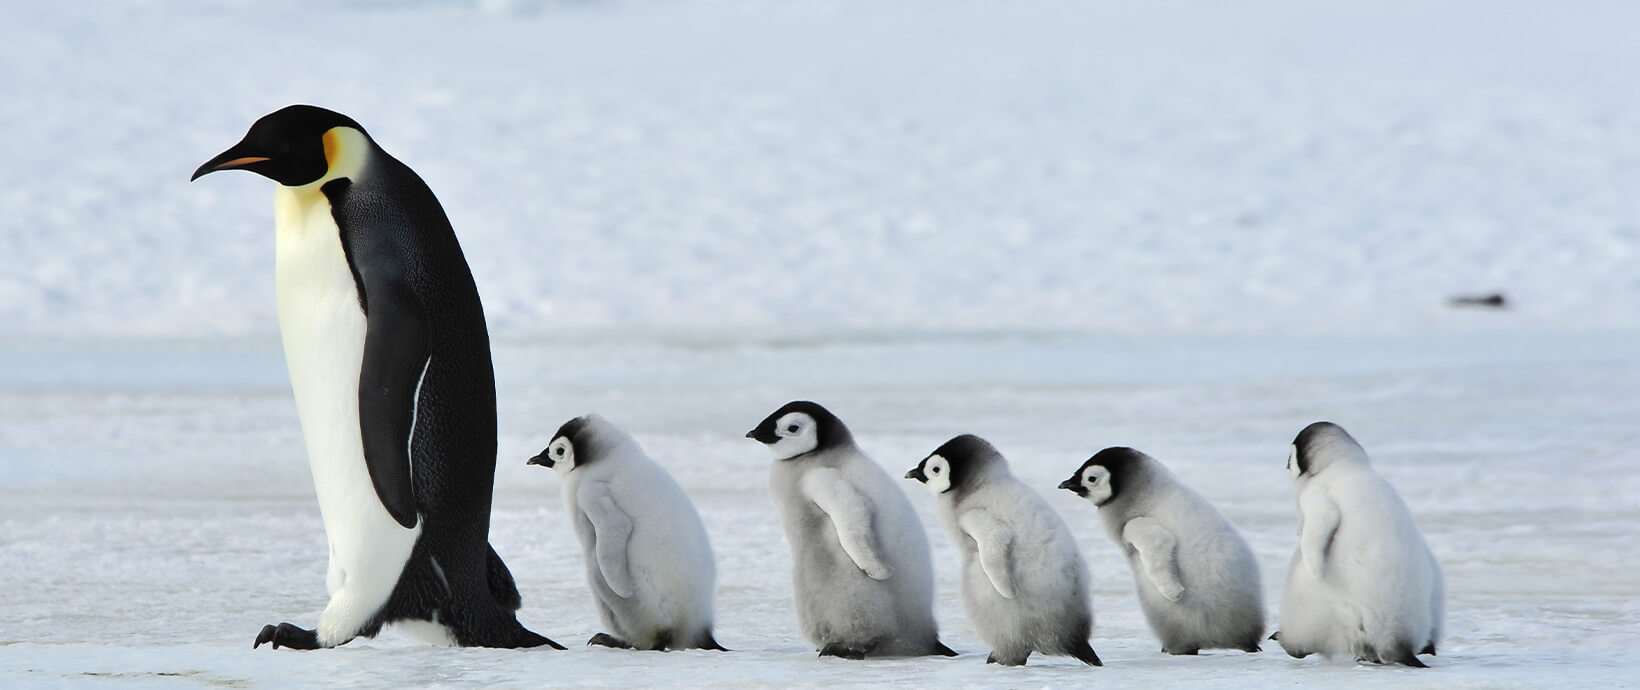 Digital Debunking: Why Don’t Penguins’ Feet Freeze?